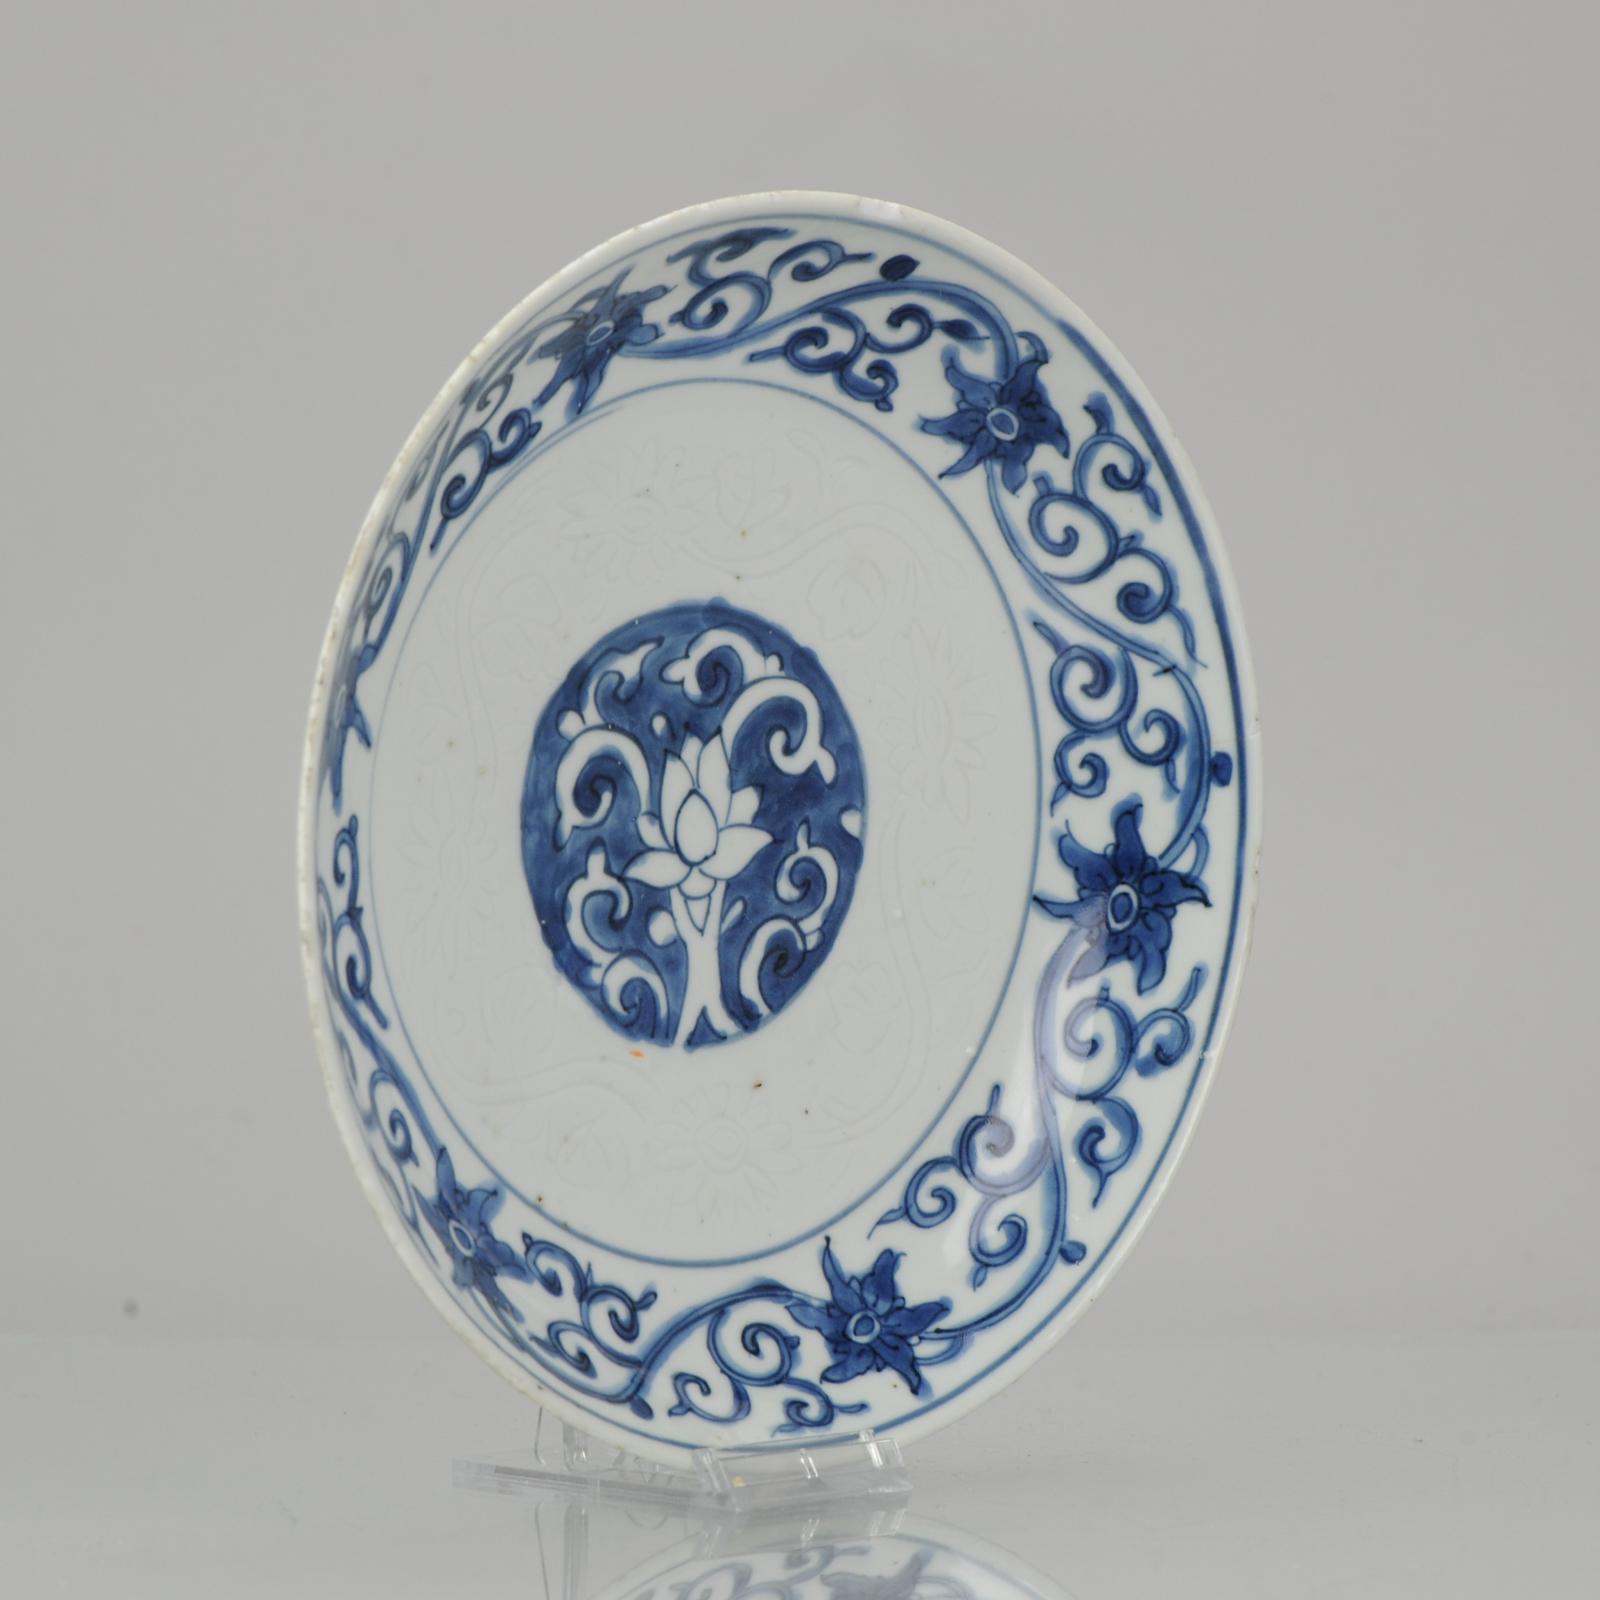 Antique Chinese Porcelain Lotus Ming 1600-1640 Tianqi Chongzhen Anhua Engraving For Sale 8